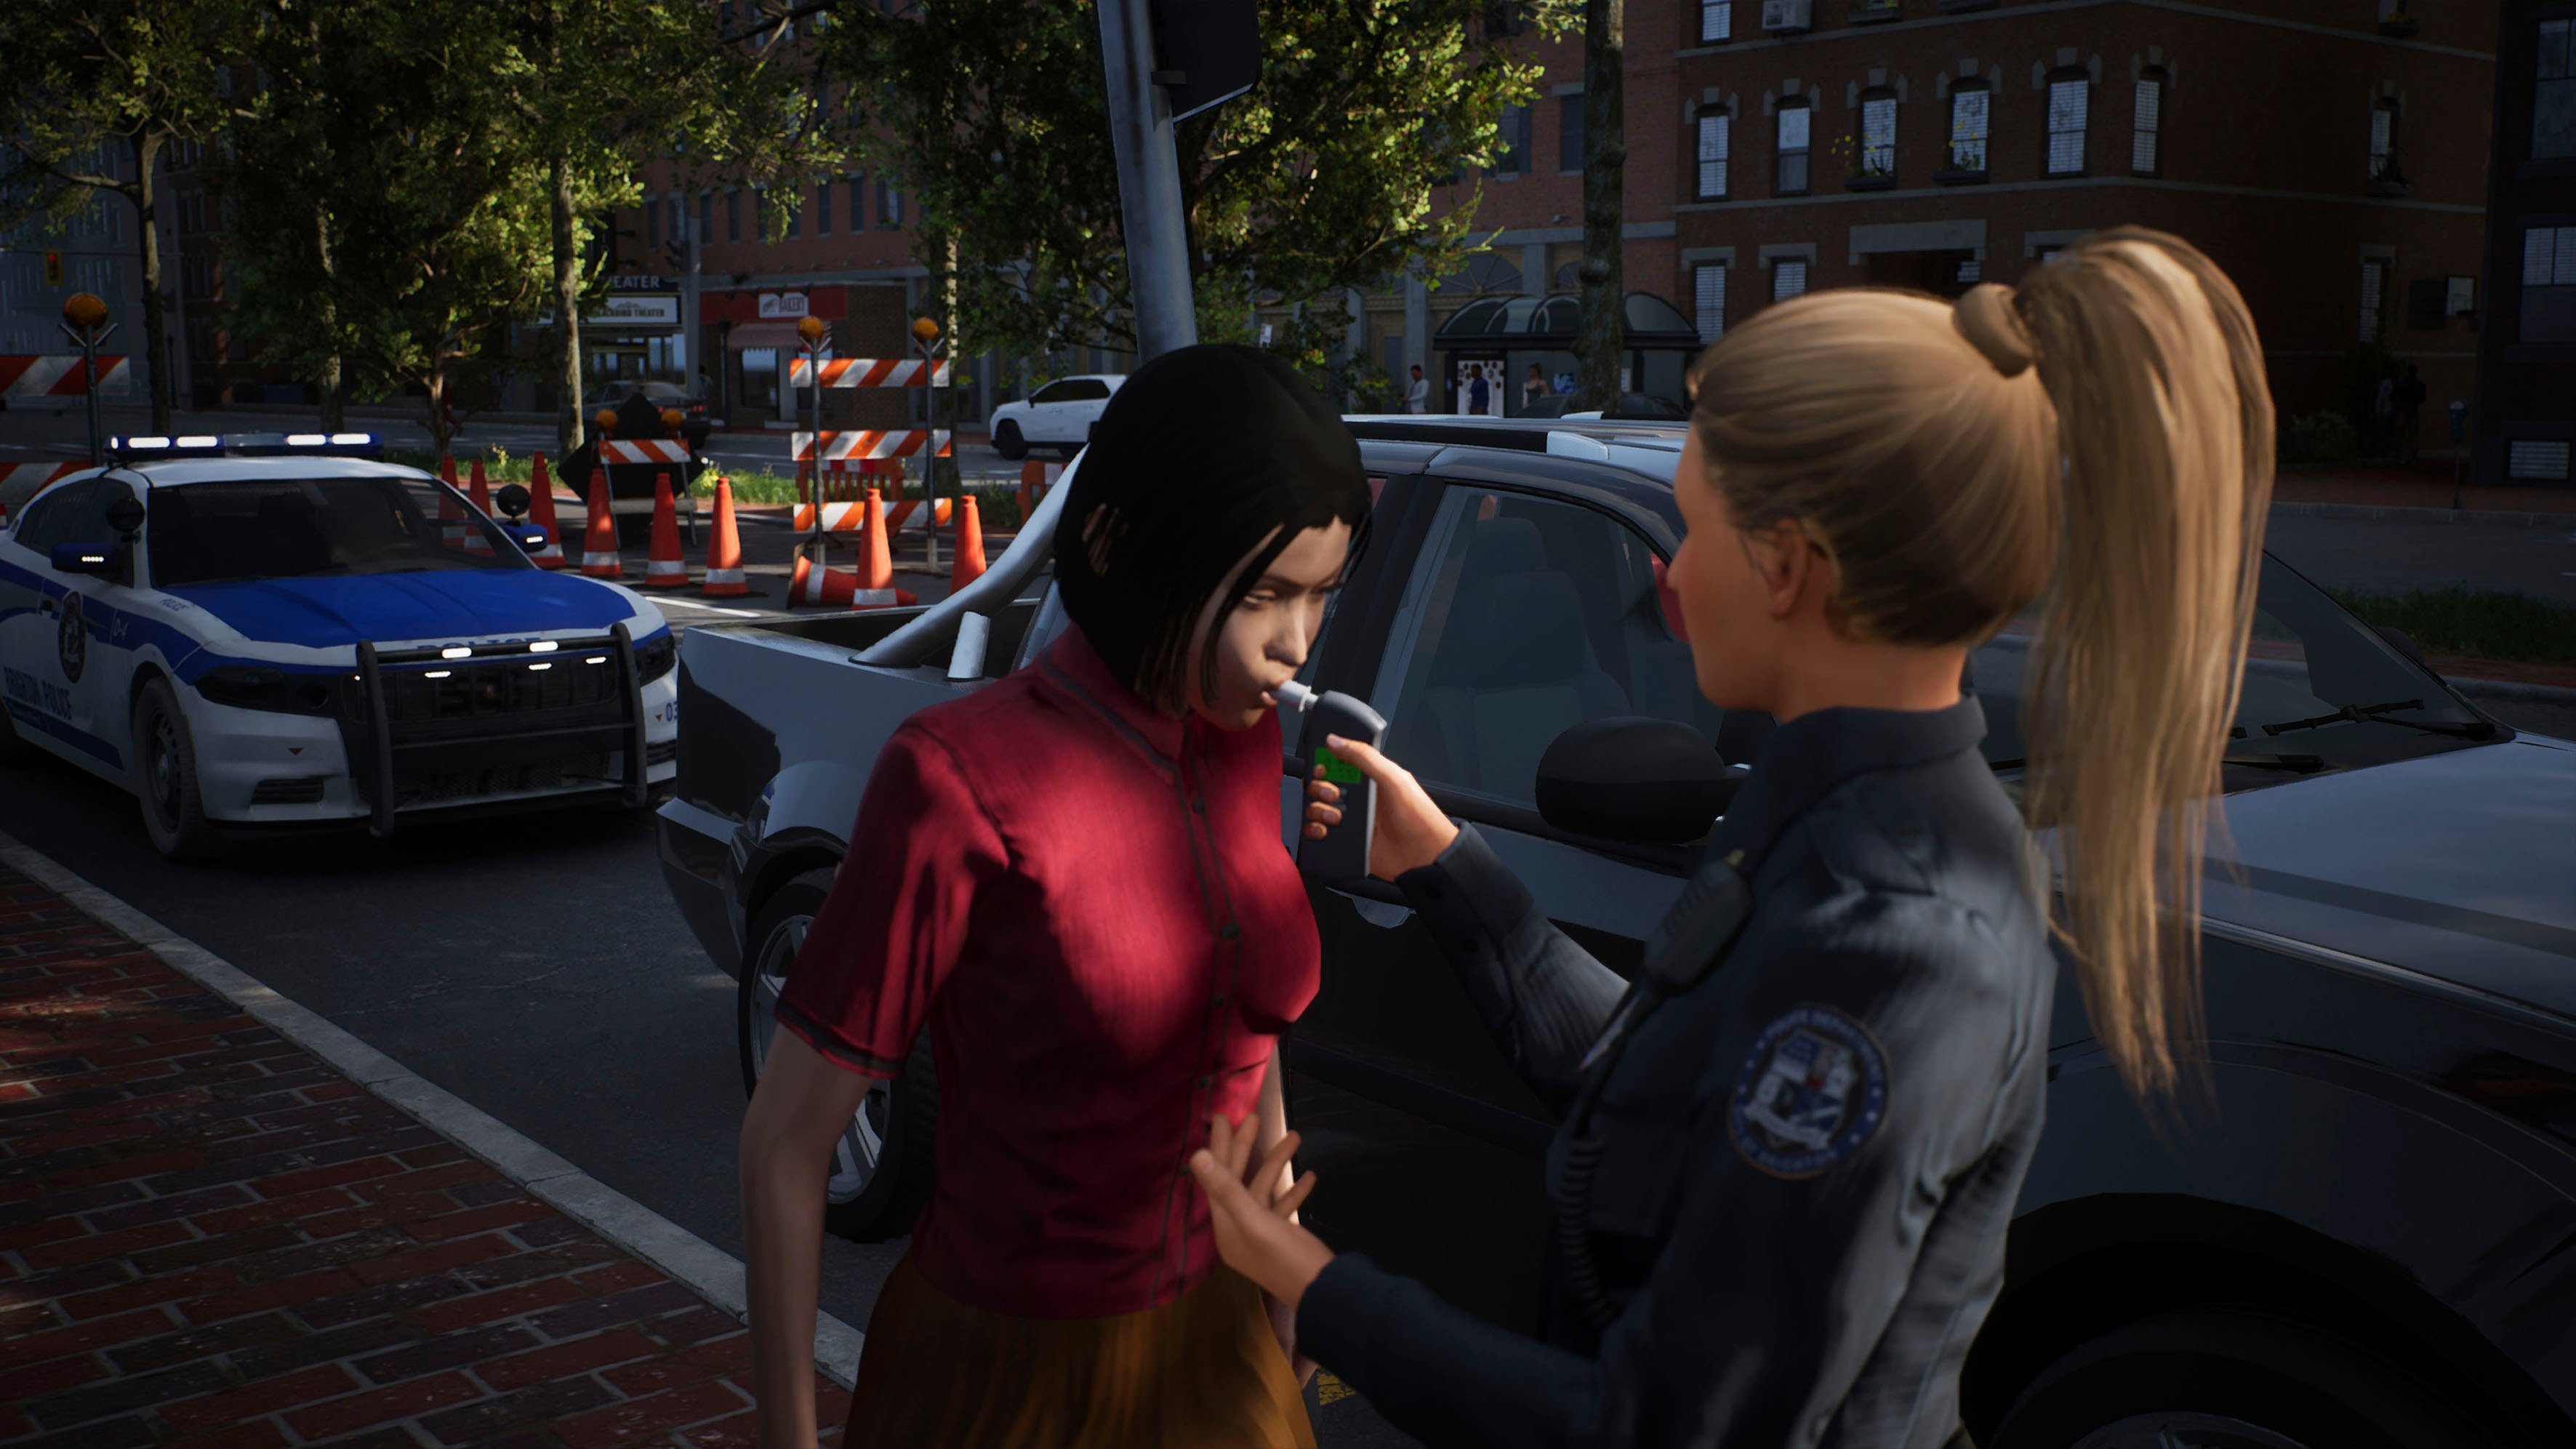 Astragon Police Simulator: Patrol 5 PlayStation Officers